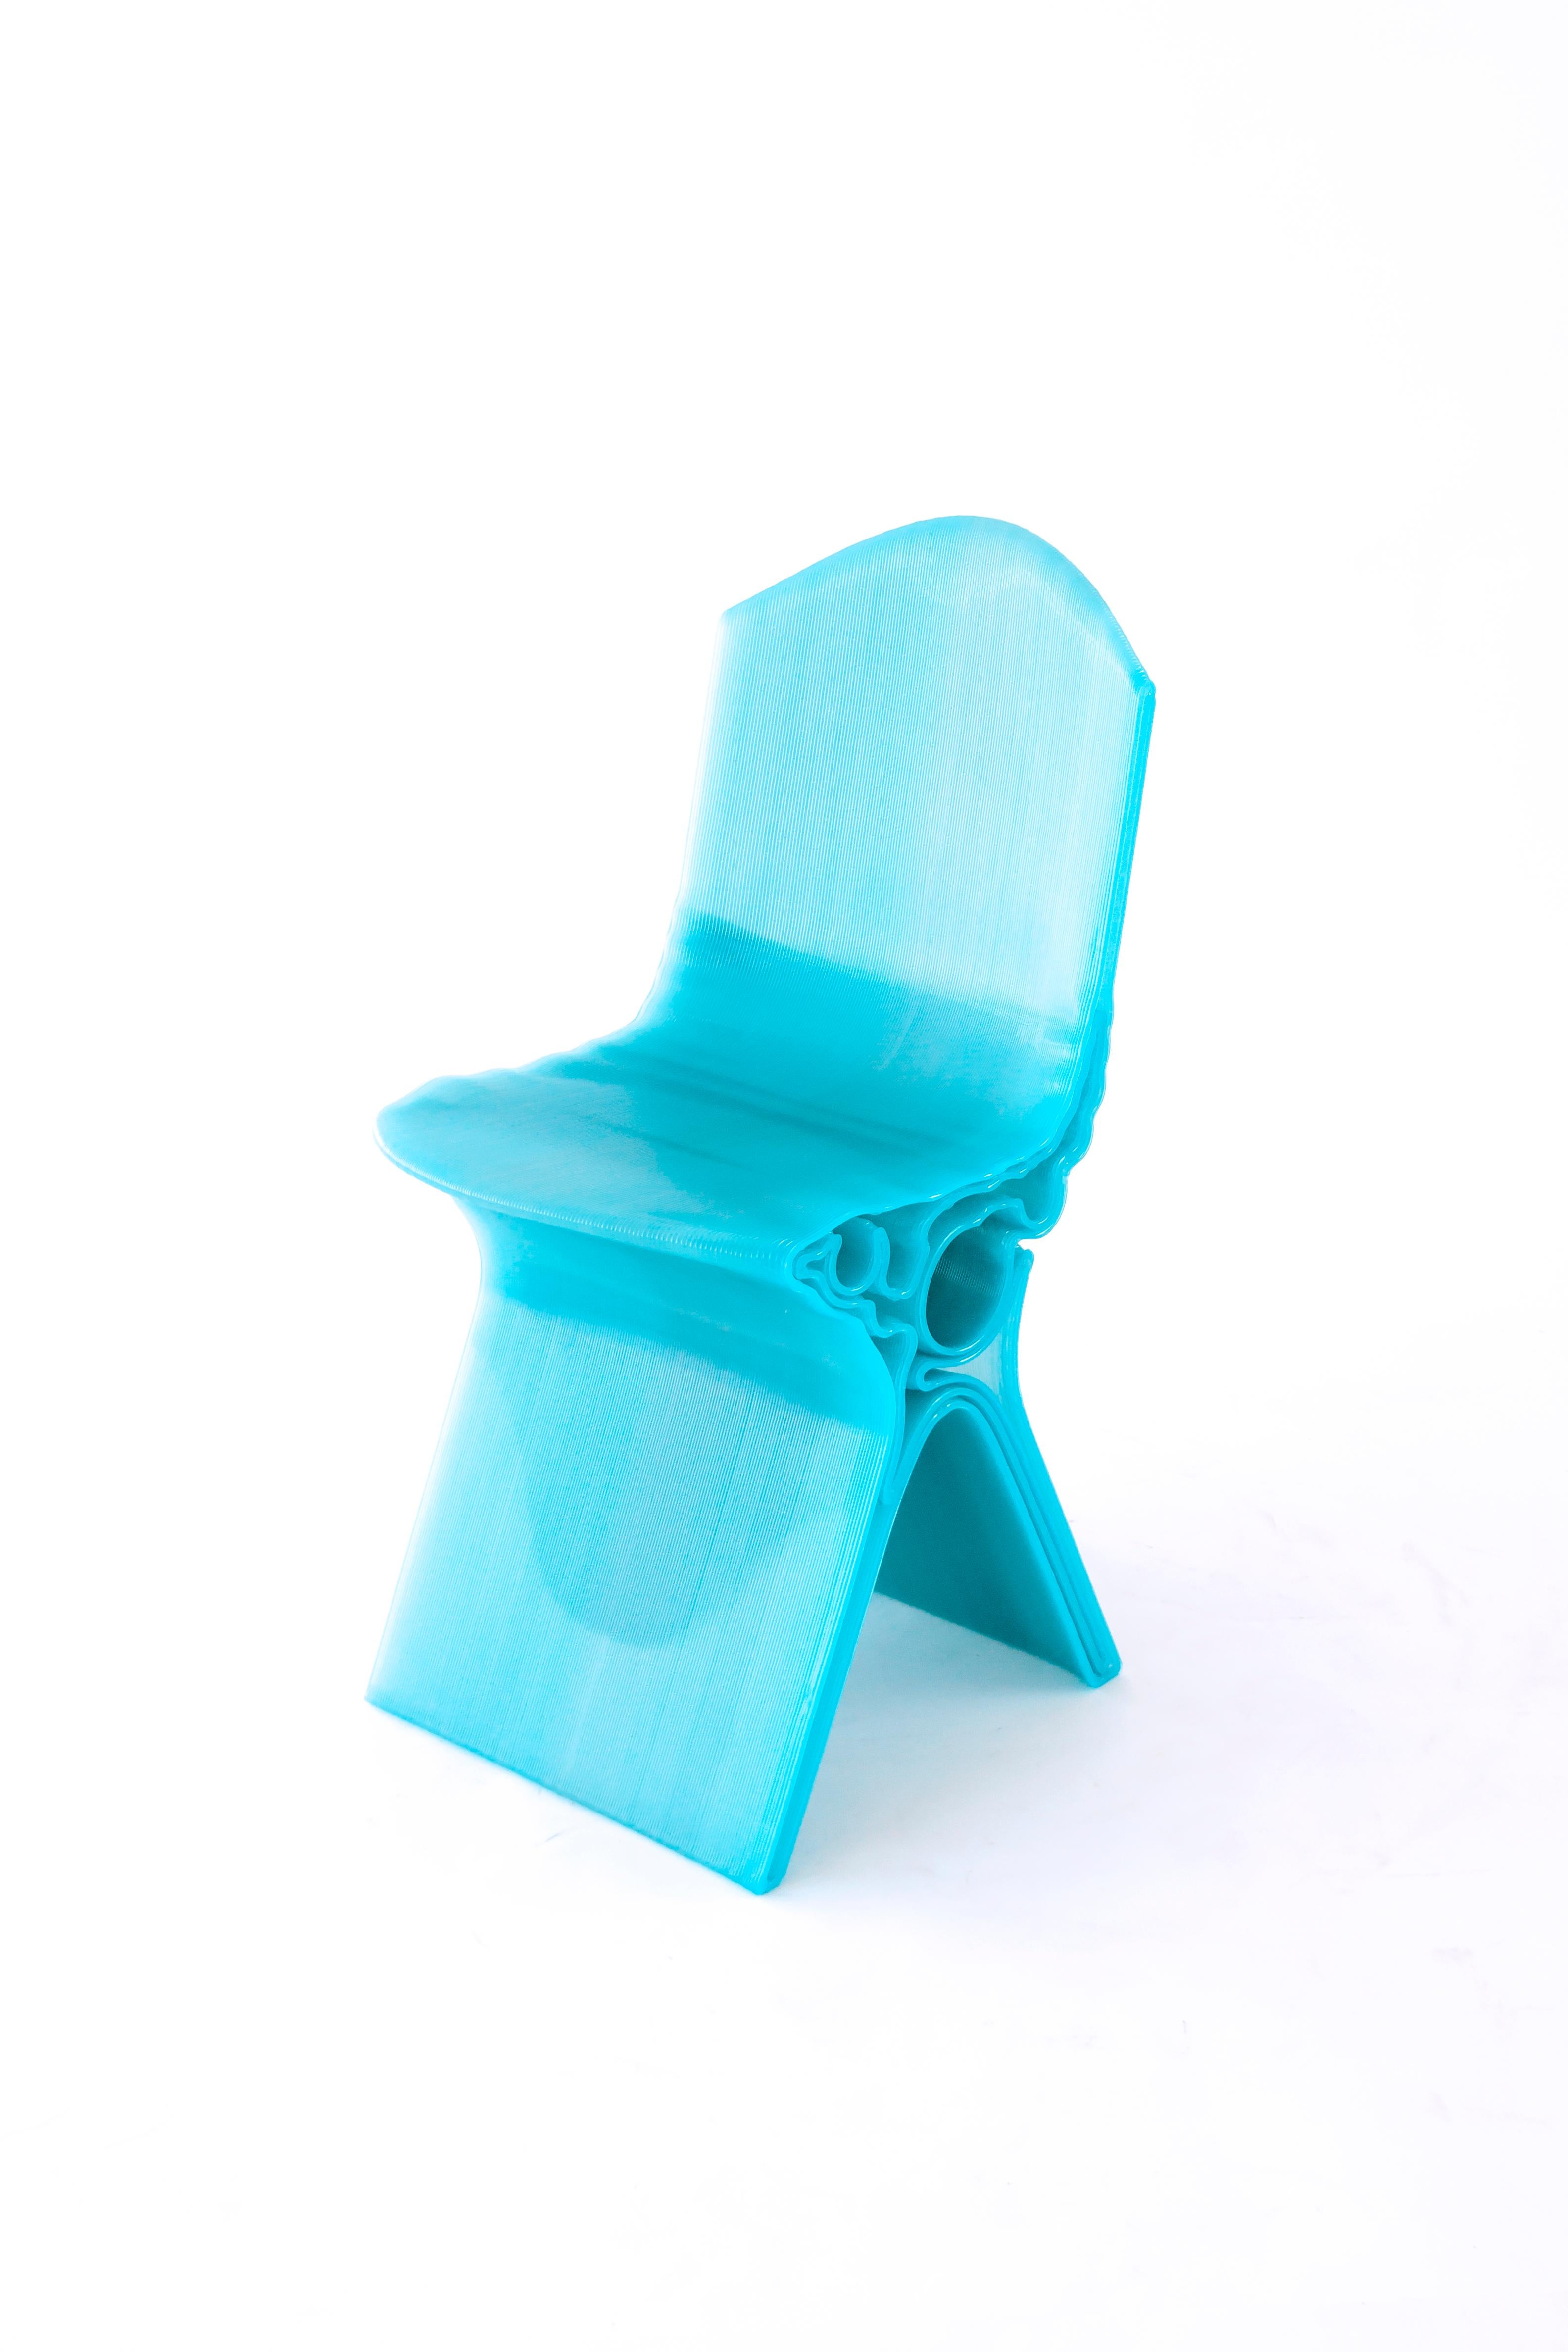 Spanish Modern Manuel Jiménez Nagami Dining Chair 3D Printed Recycled Plastic For Sale